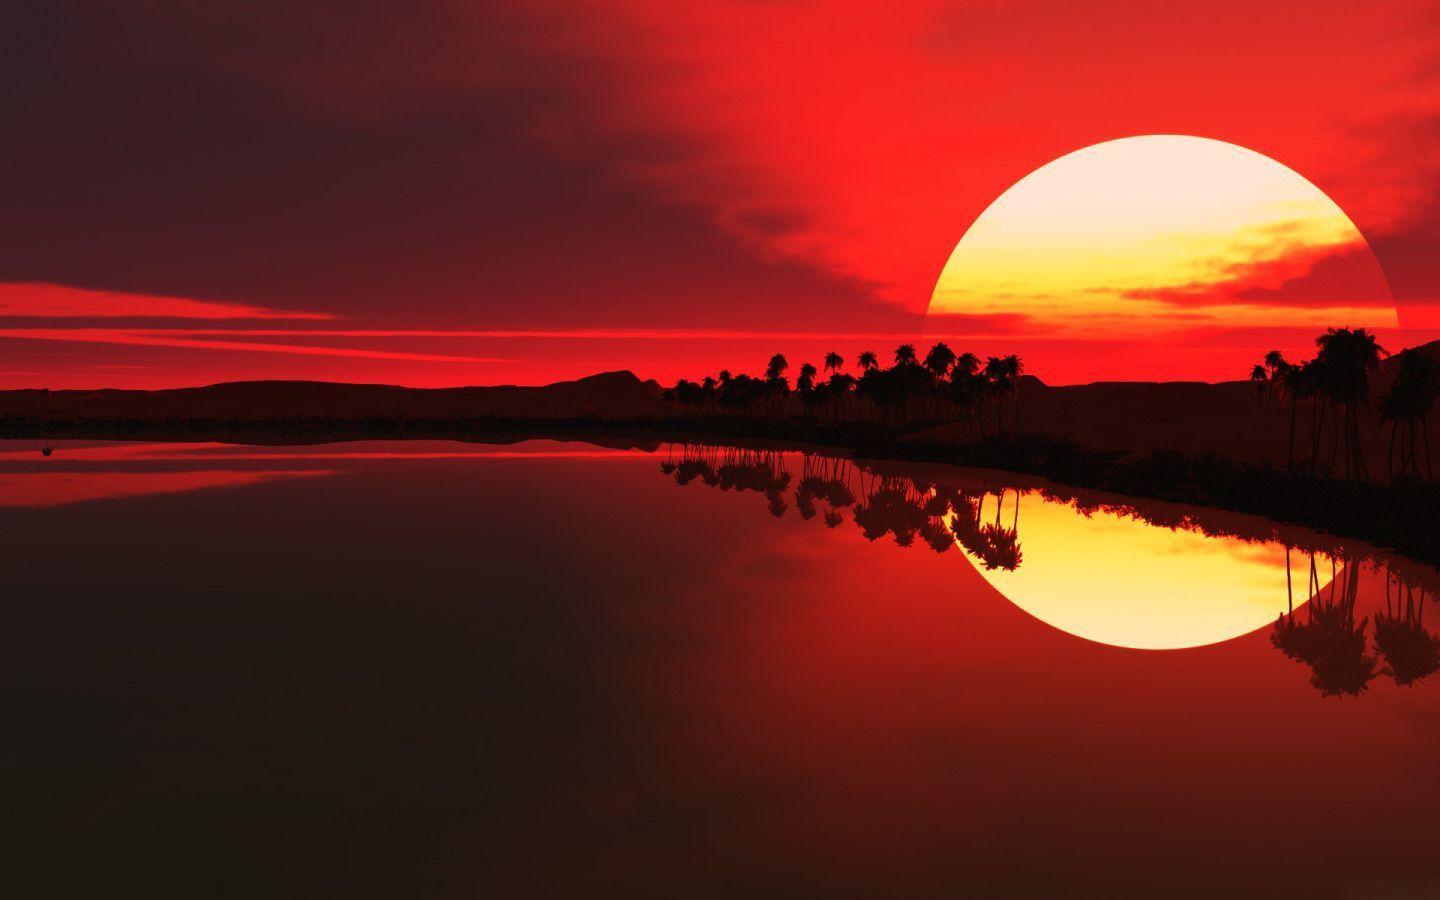 Sunset in Africa widescreen wallpaper. Wide